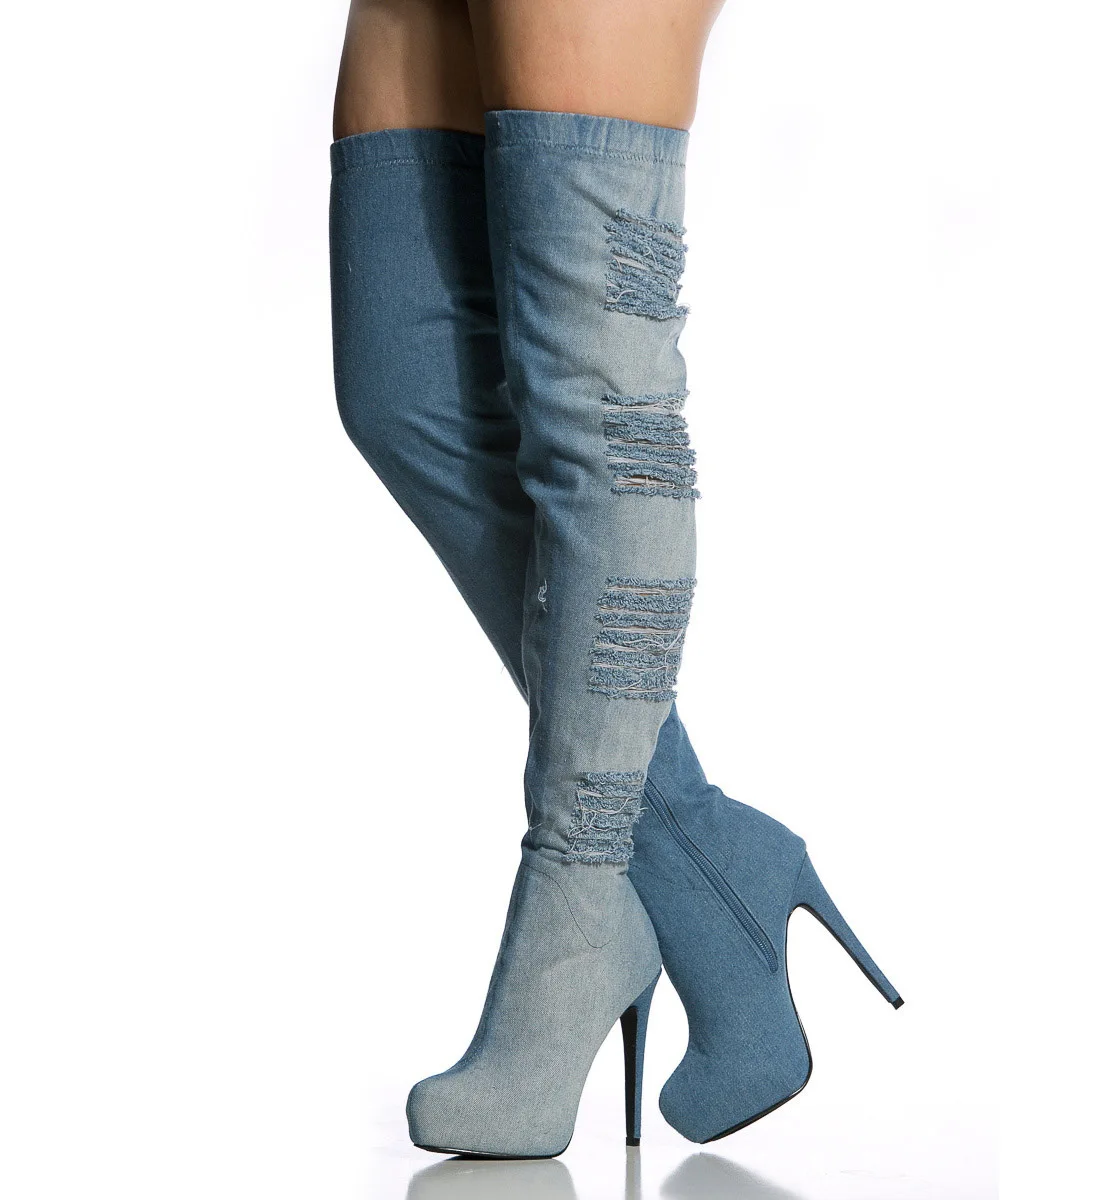 Boy denim boots female thigh high heels over knee boots platform stiletto elastic round thumb200